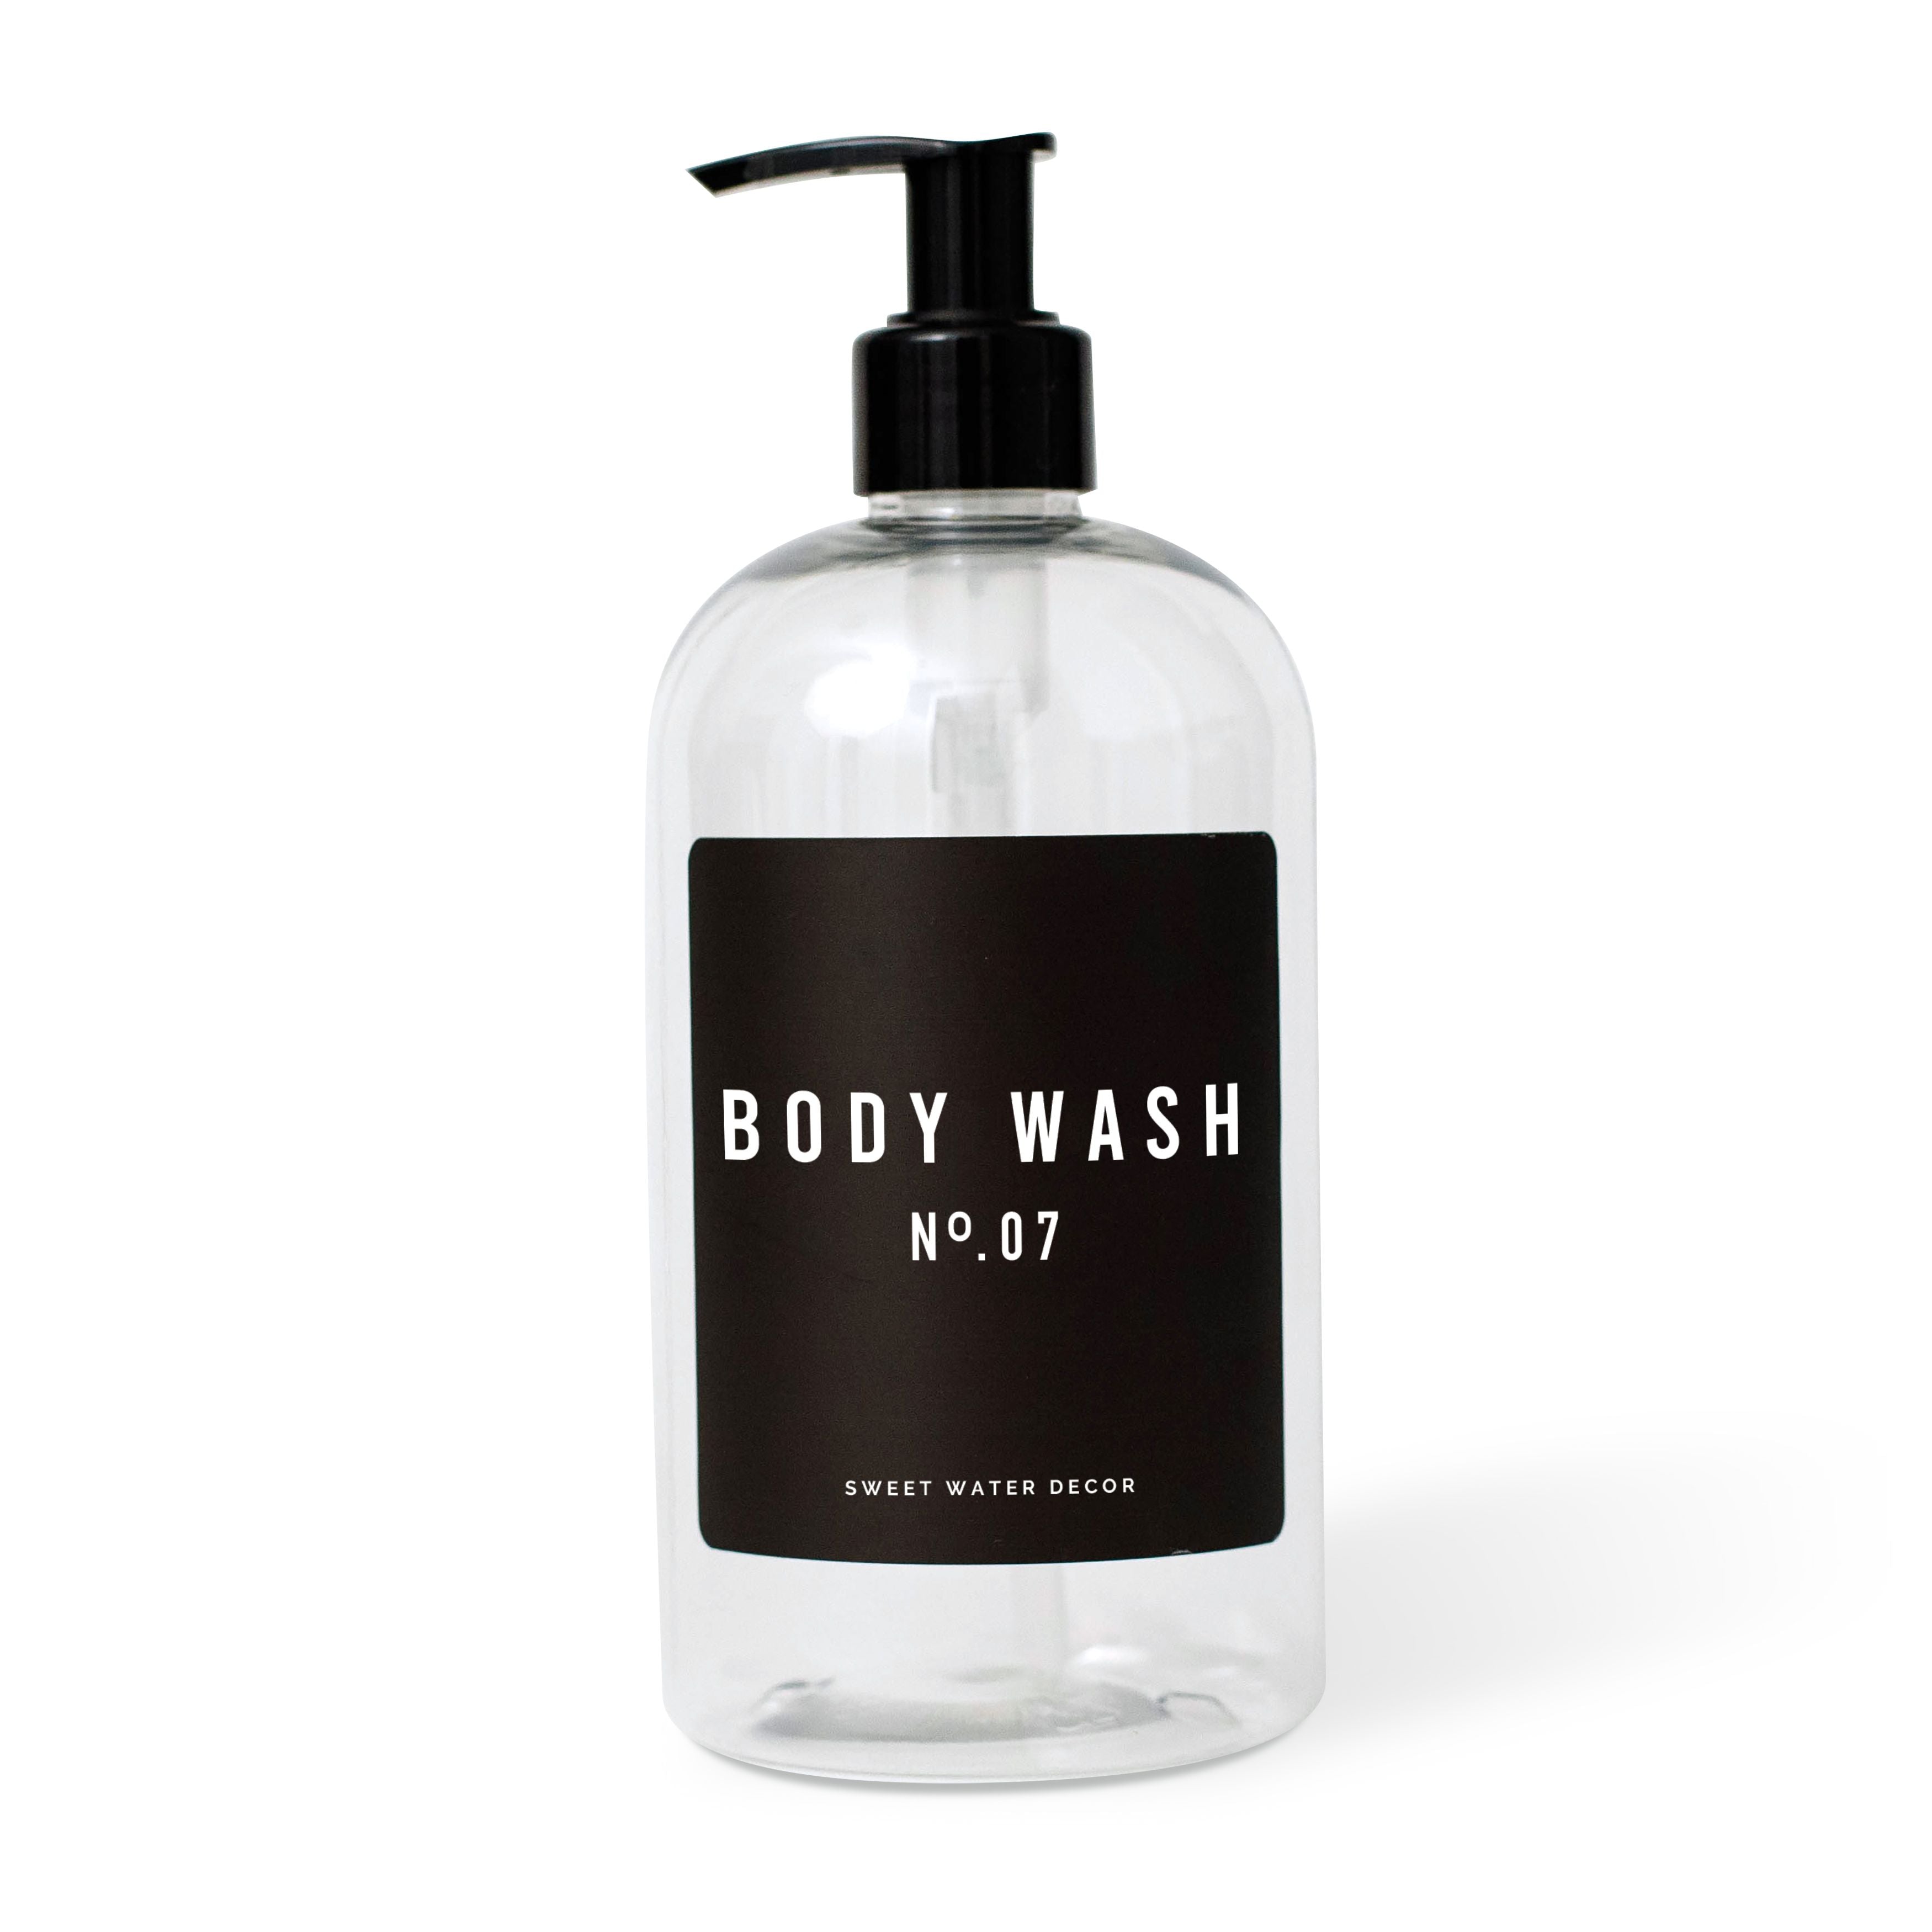 16oz Clear Plastic Body Wash Dispenser - Black Label